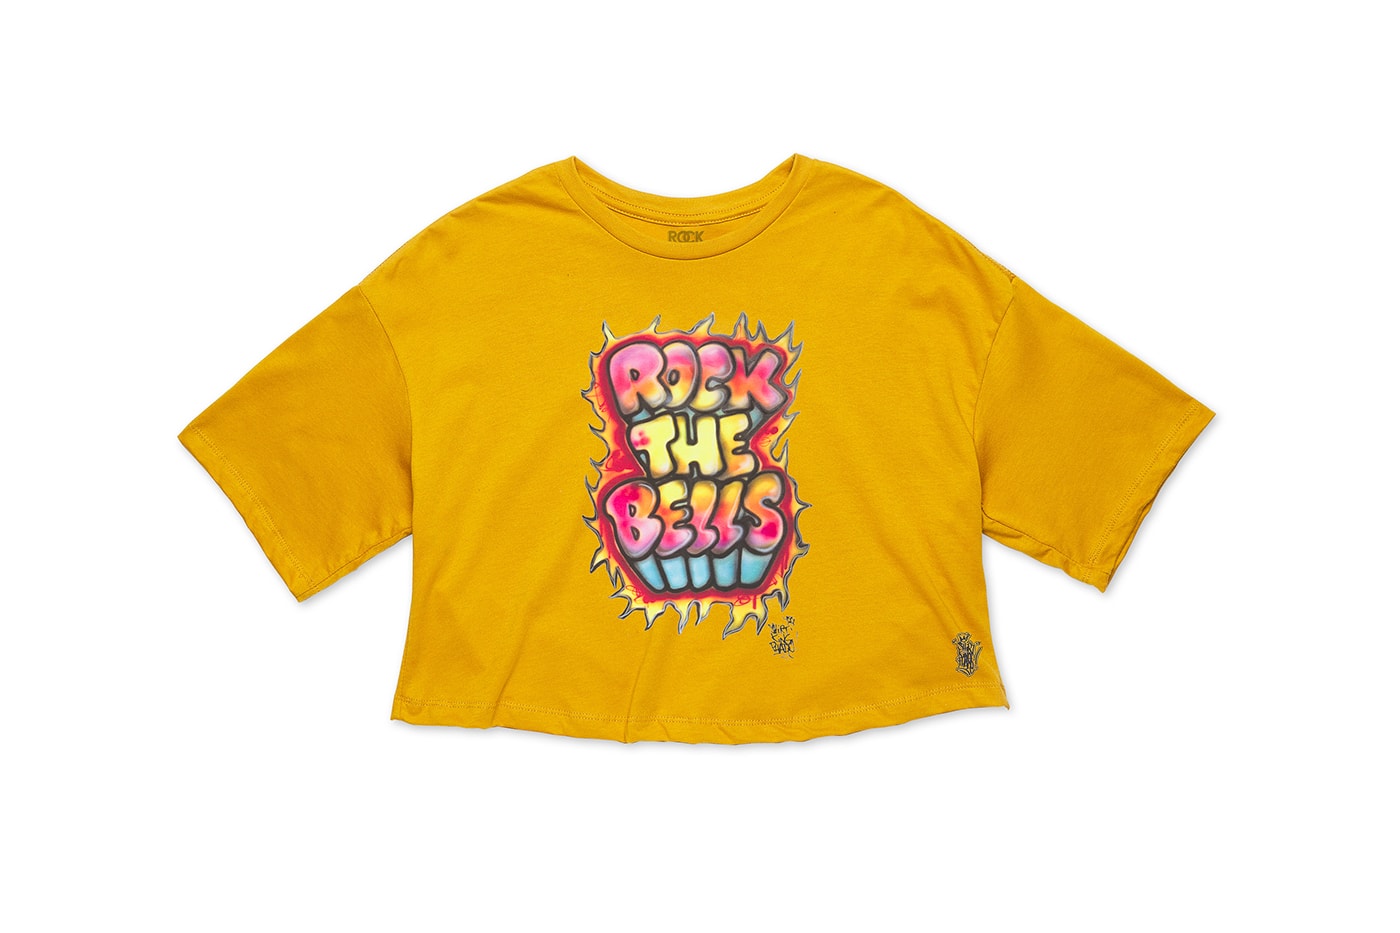 Shirt King Phade x Rock the Bells Graffiti Streetwear Capsule t-shirts bubble airbrush prints ll cool j hip-hop street style drop info 